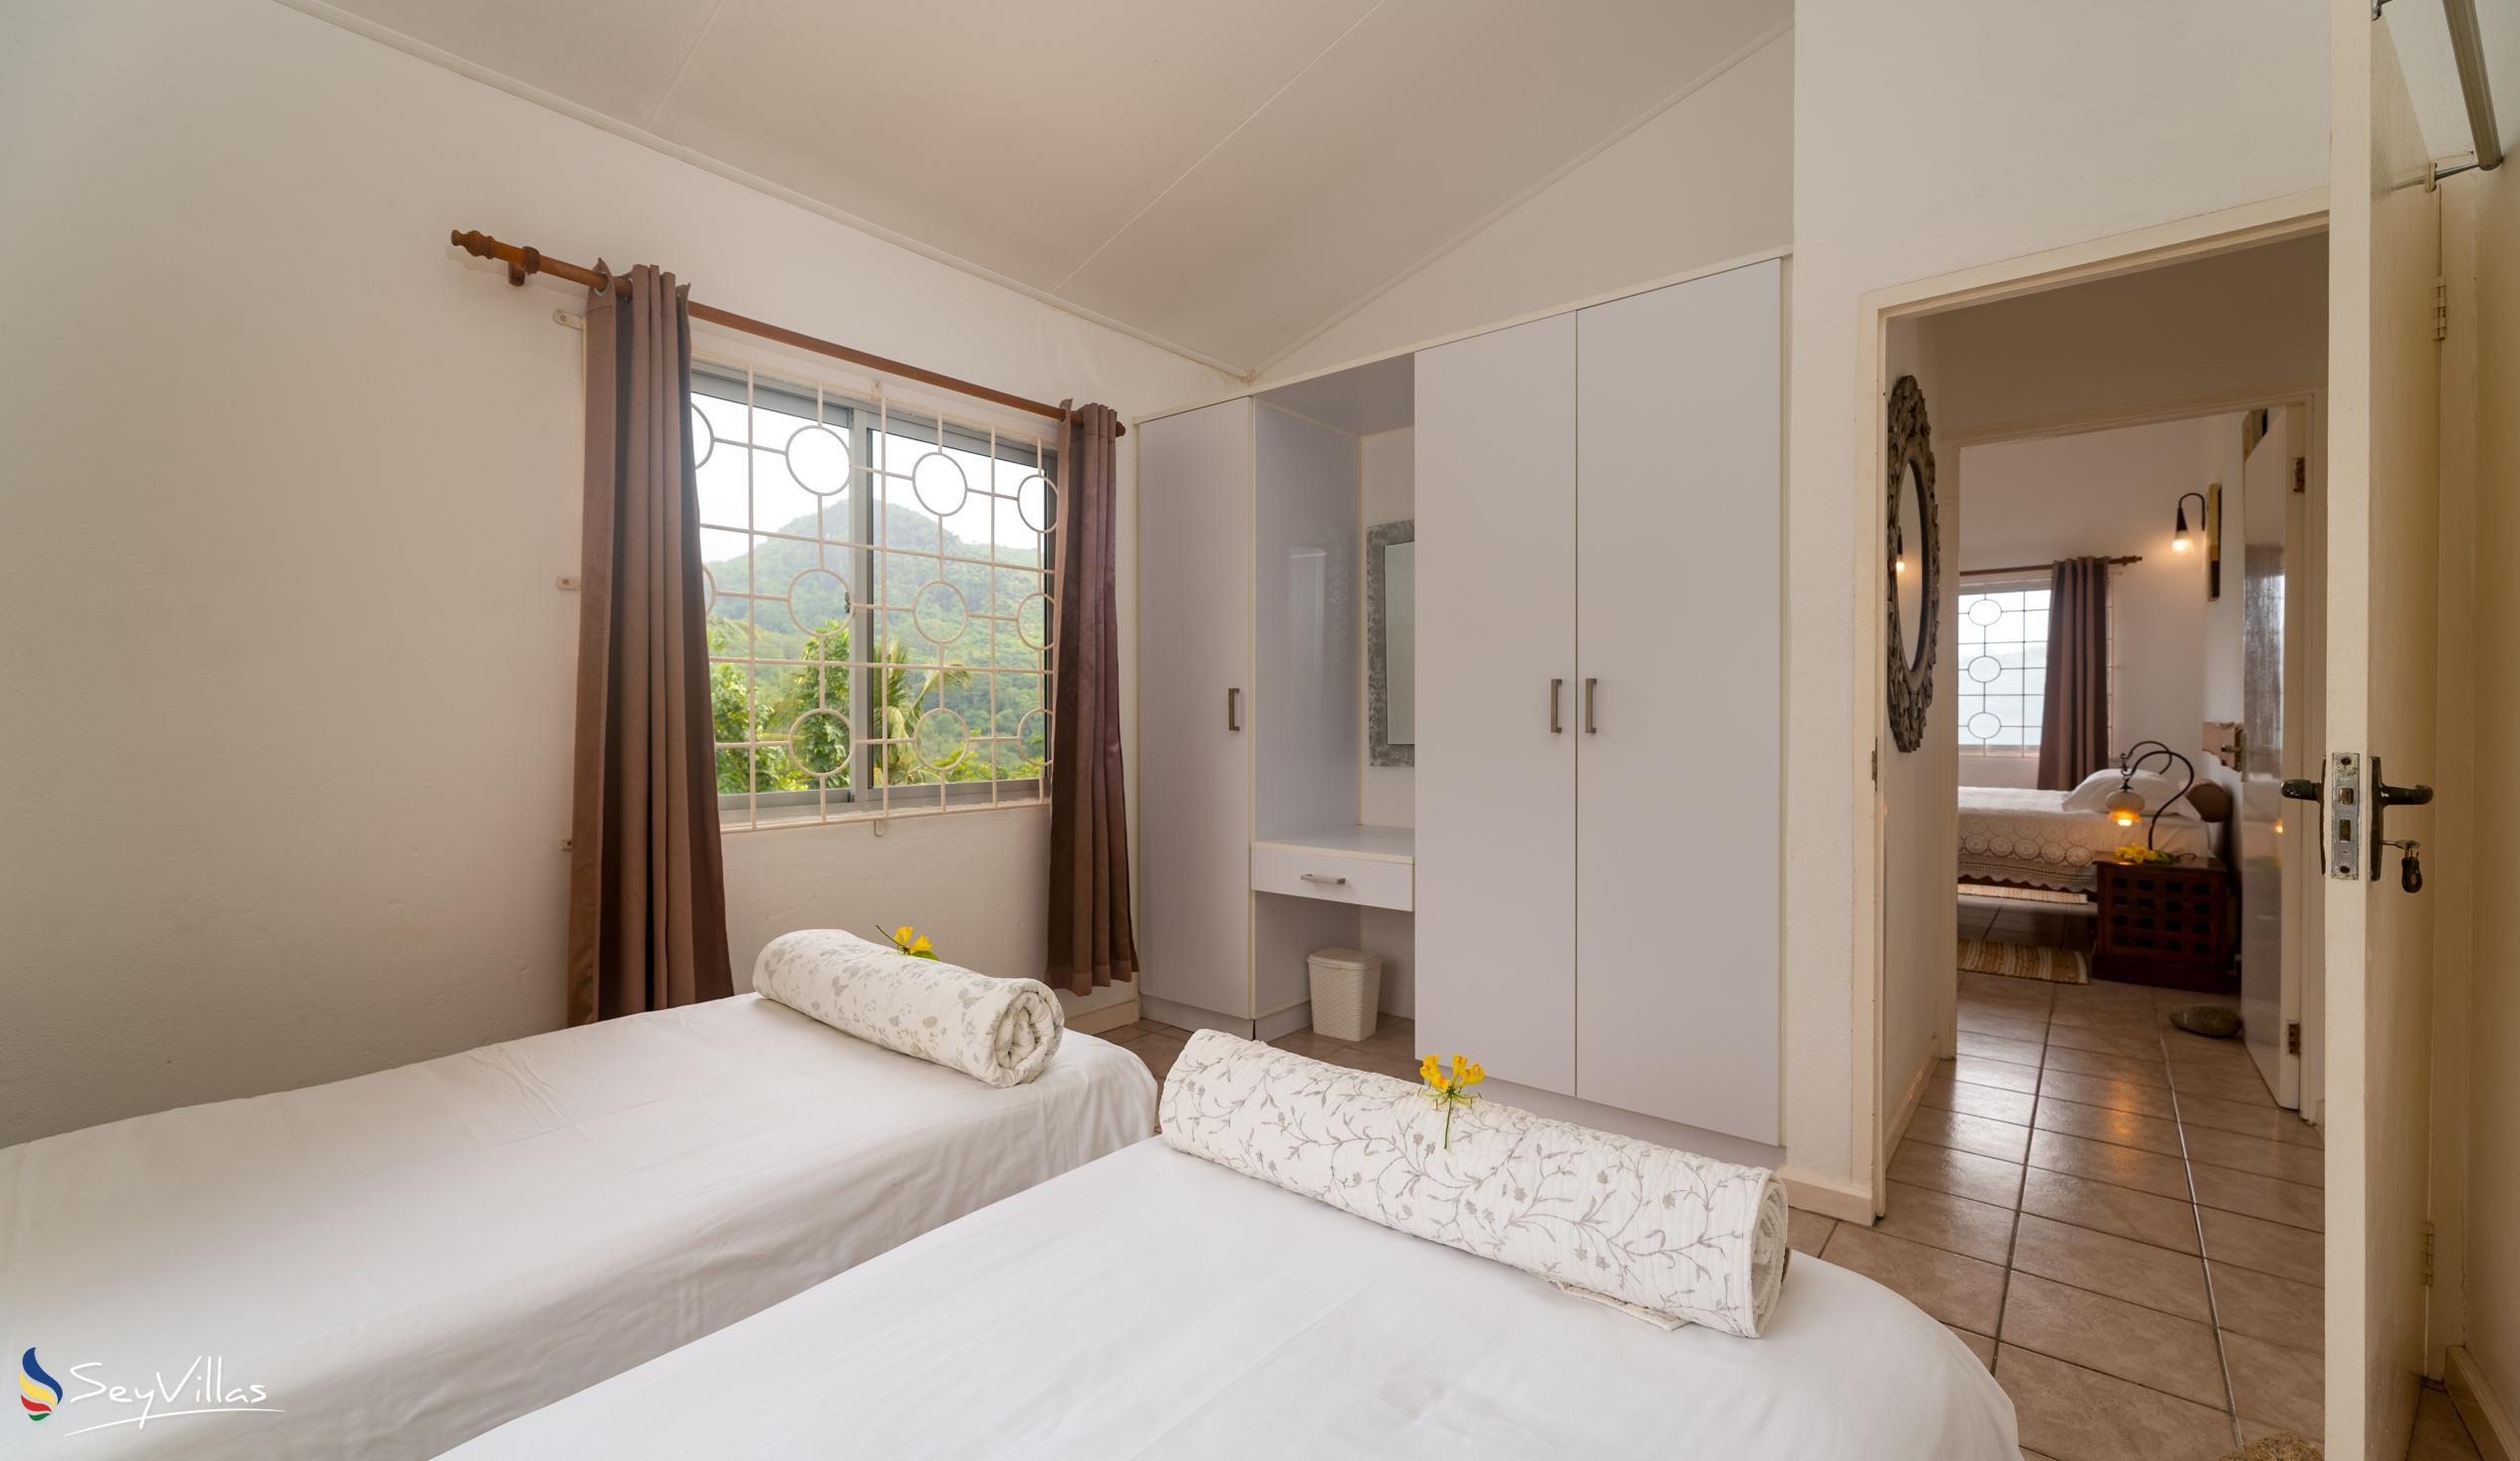 Photo 71: Residence Monte Cristo - 2-Bedroom Apartment - Mahé (Seychelles)